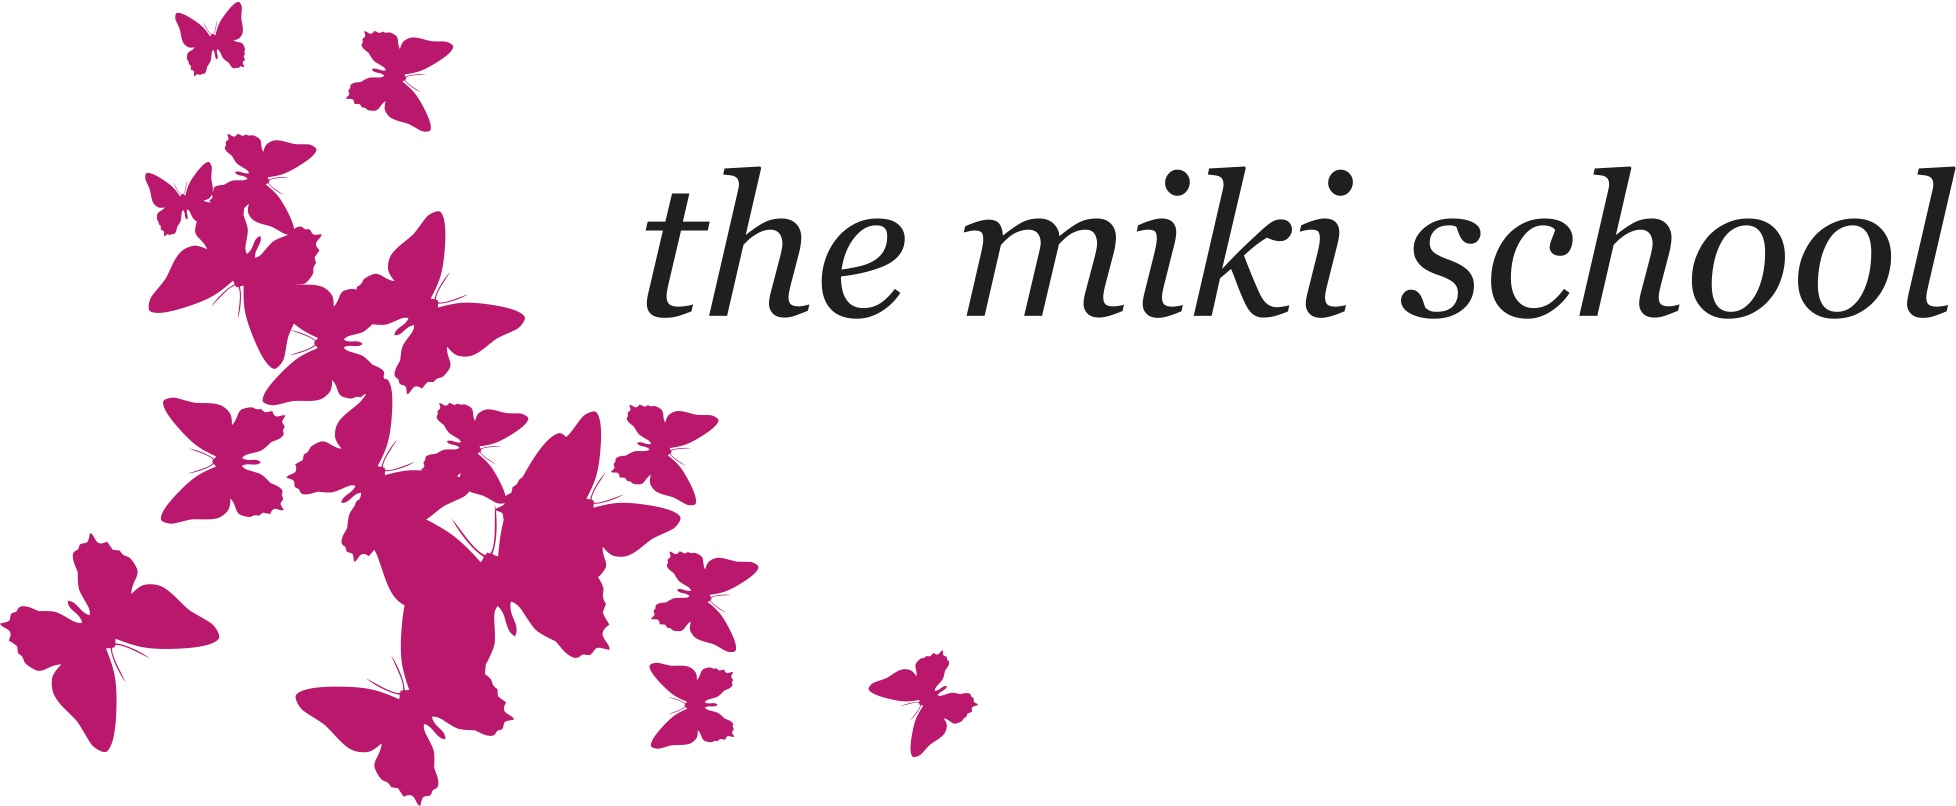 The miki school